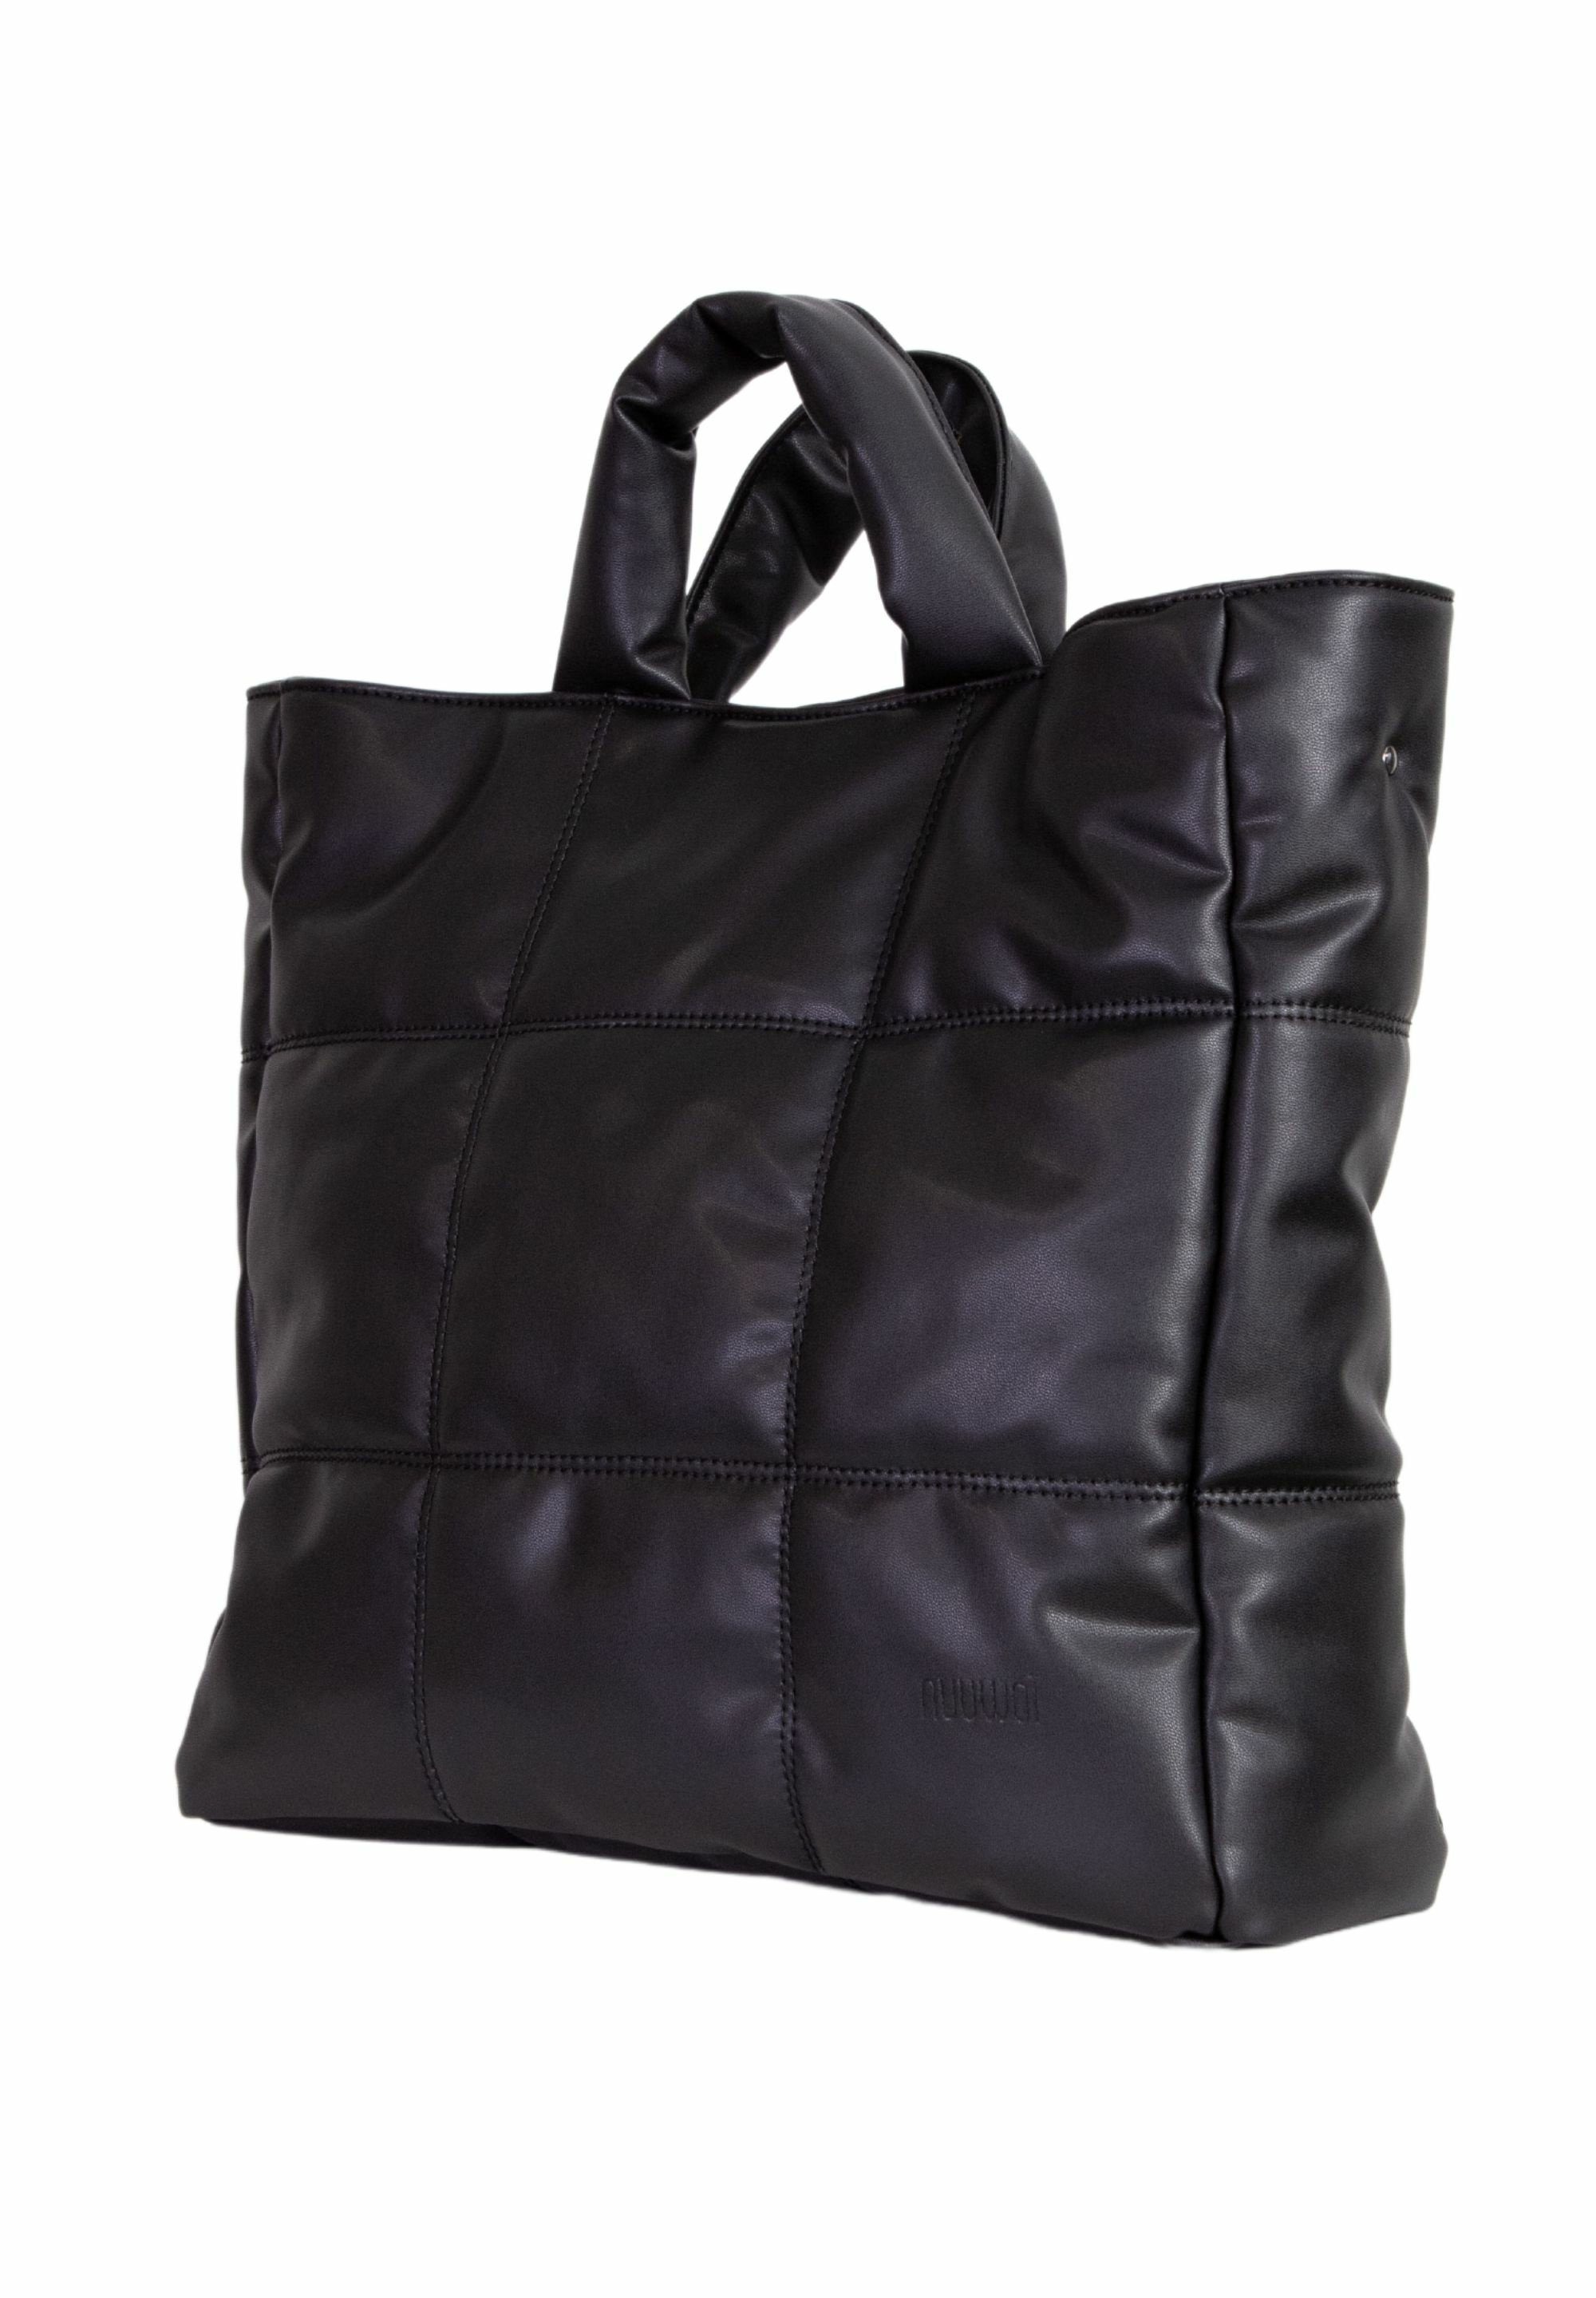 Lederalternative black LINN, & bio-basierte Handtasche nachhaltig, fair nuuwai deep